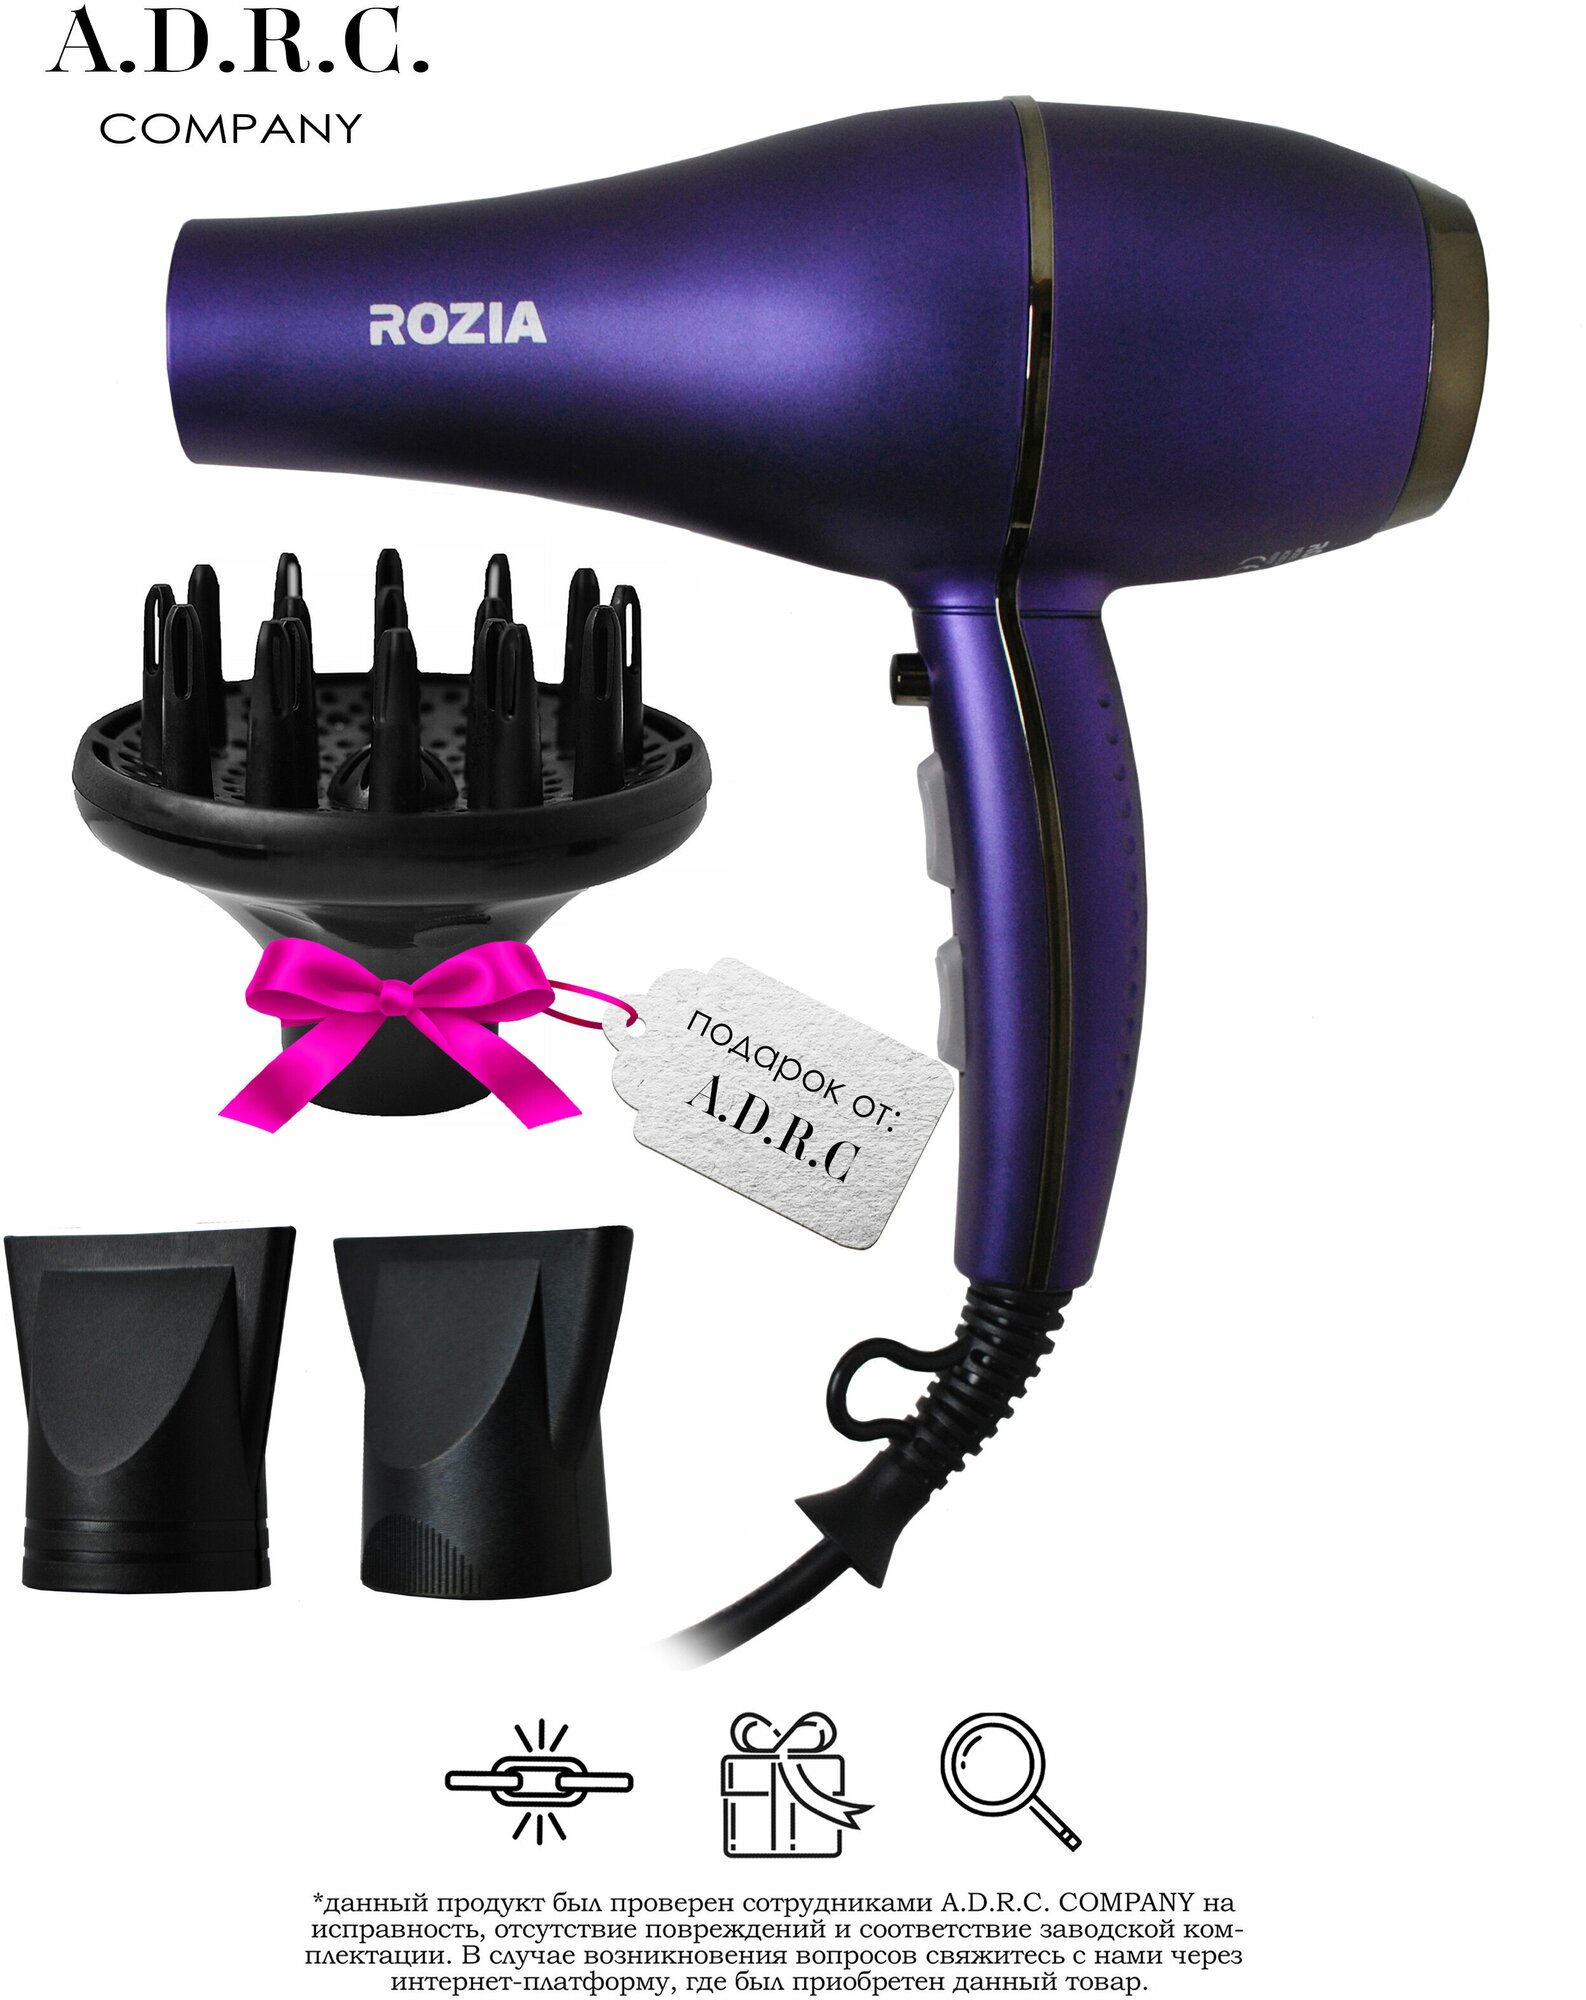 Фен Rozia Pro , Фен для волос, уход за волосами , Профессиональный фен для волос, для сушки волос , диффузор в подарок, 2 насадки